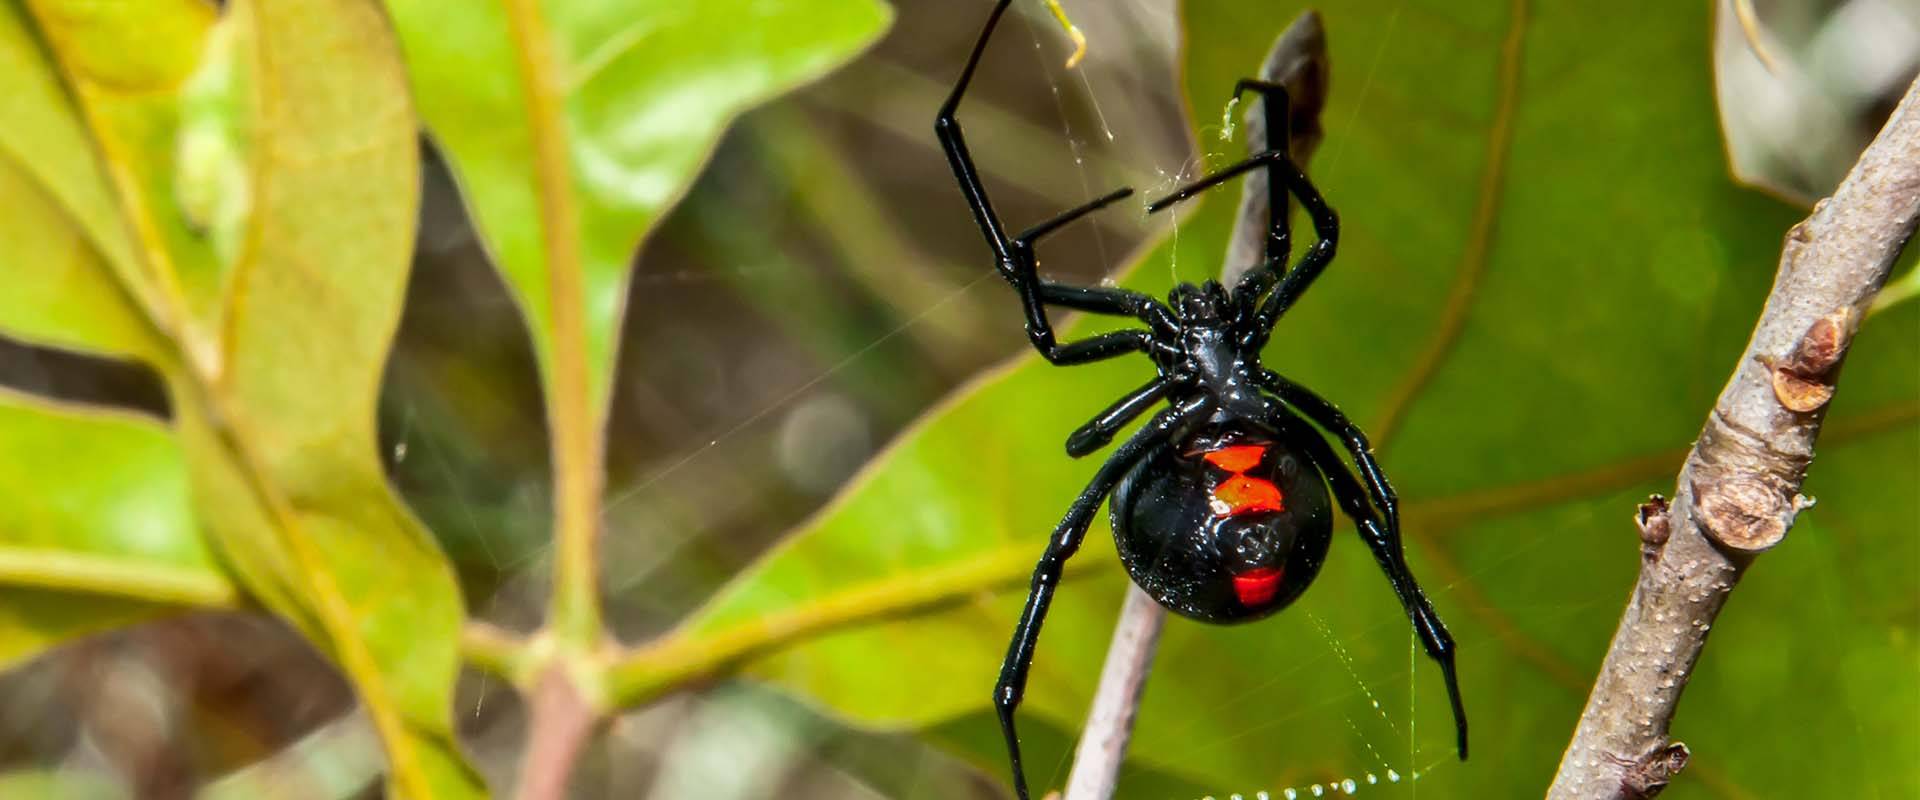 black widow spider on leaves